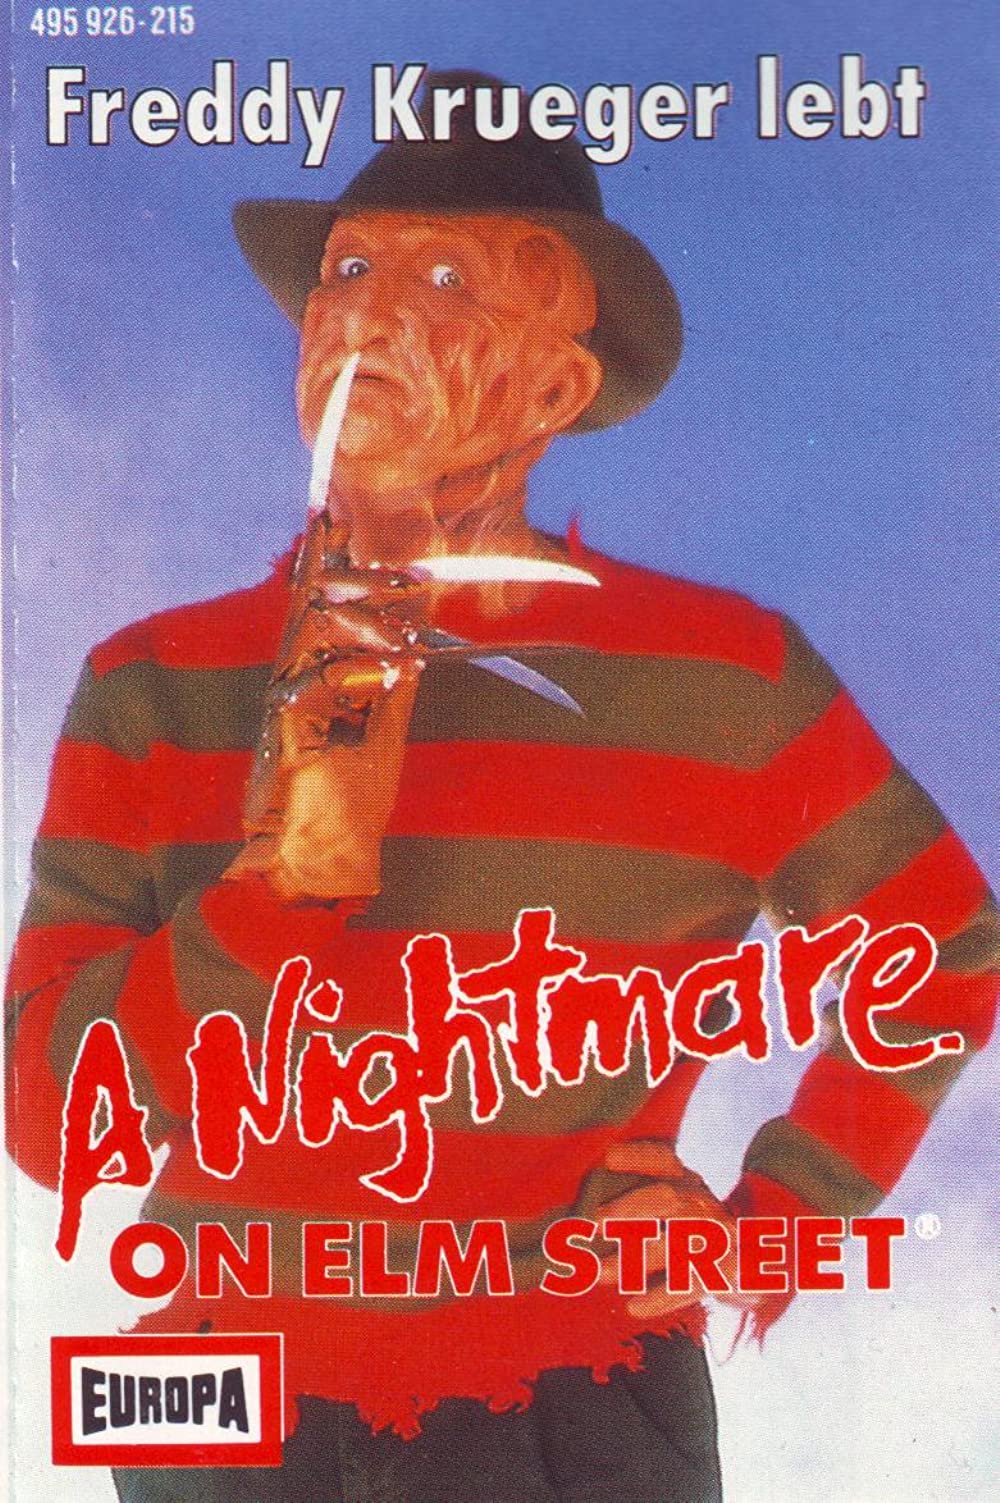 Filmbeschreibung zu Nightmare on Elm Street 3: Freddy Krueger lebt (OV)